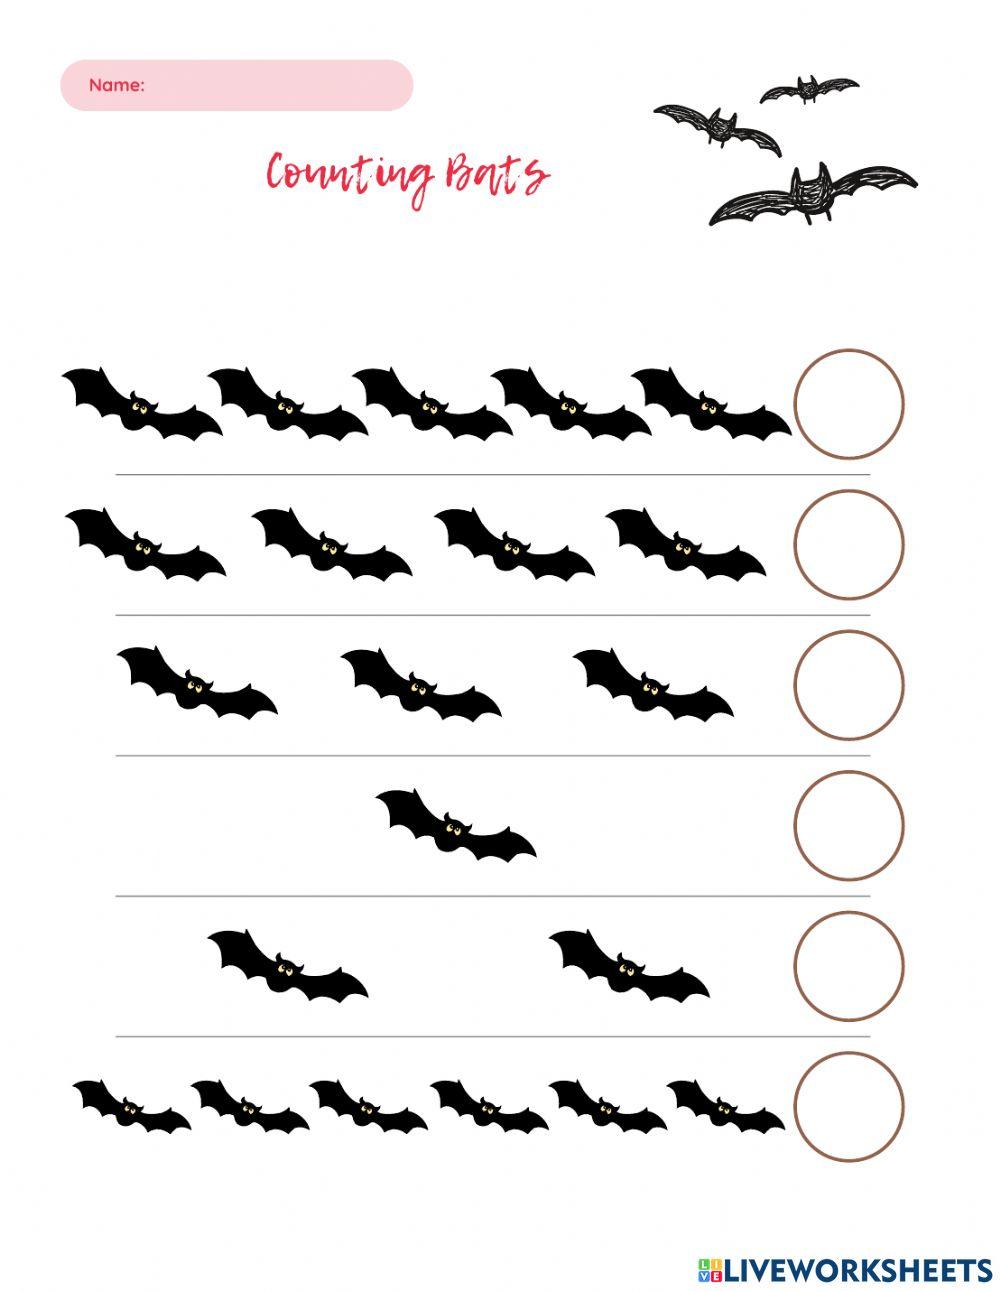 Counting bats